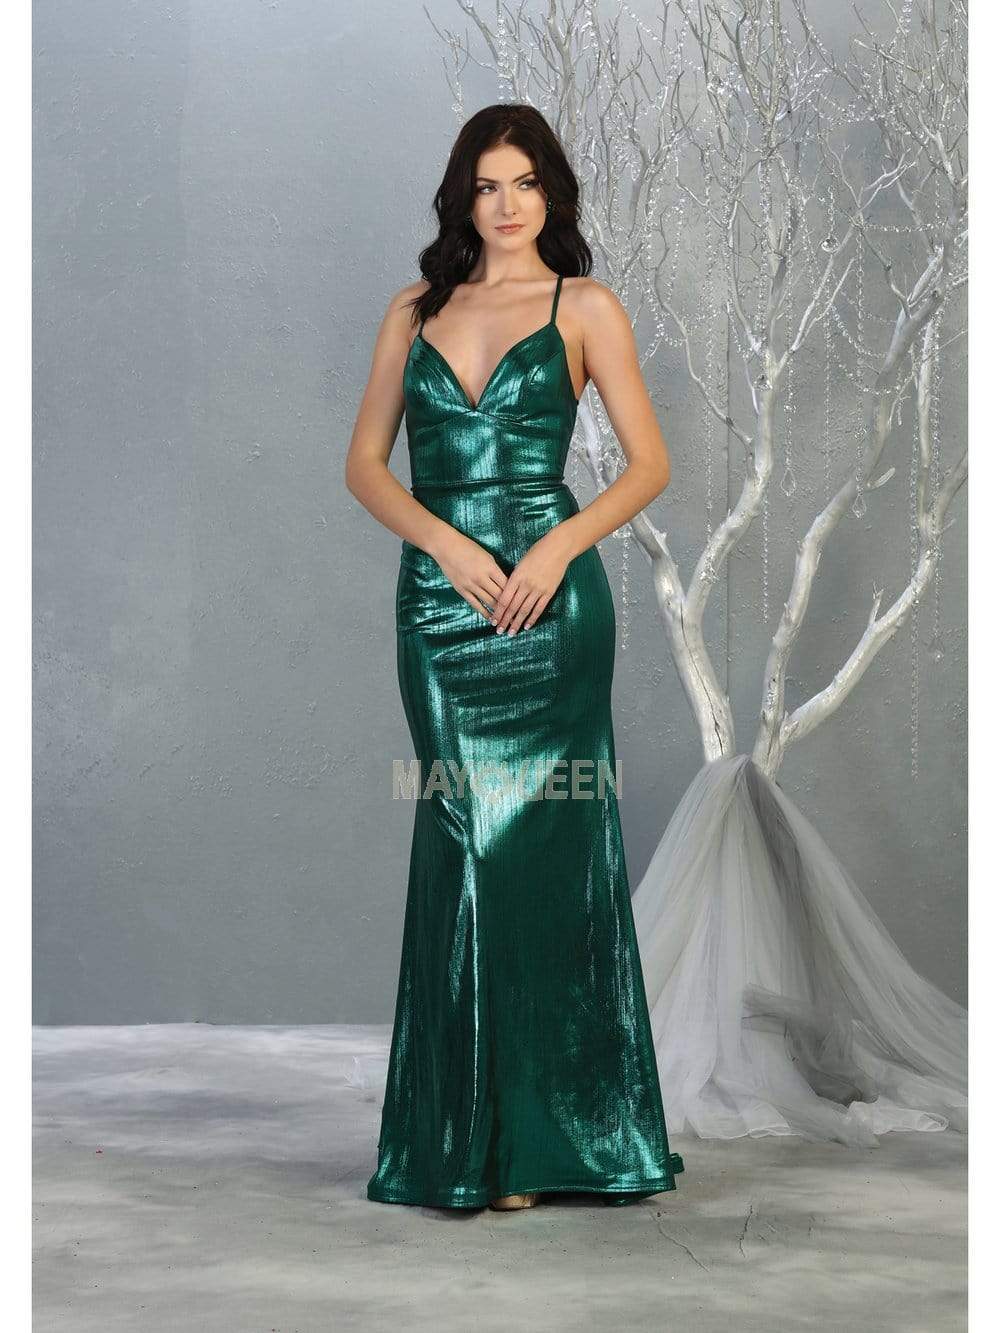 May Queen - MQ1827 Spaghetti Strap Metallic Sheath Gown Pageant Dresses 2 / Hunter Green